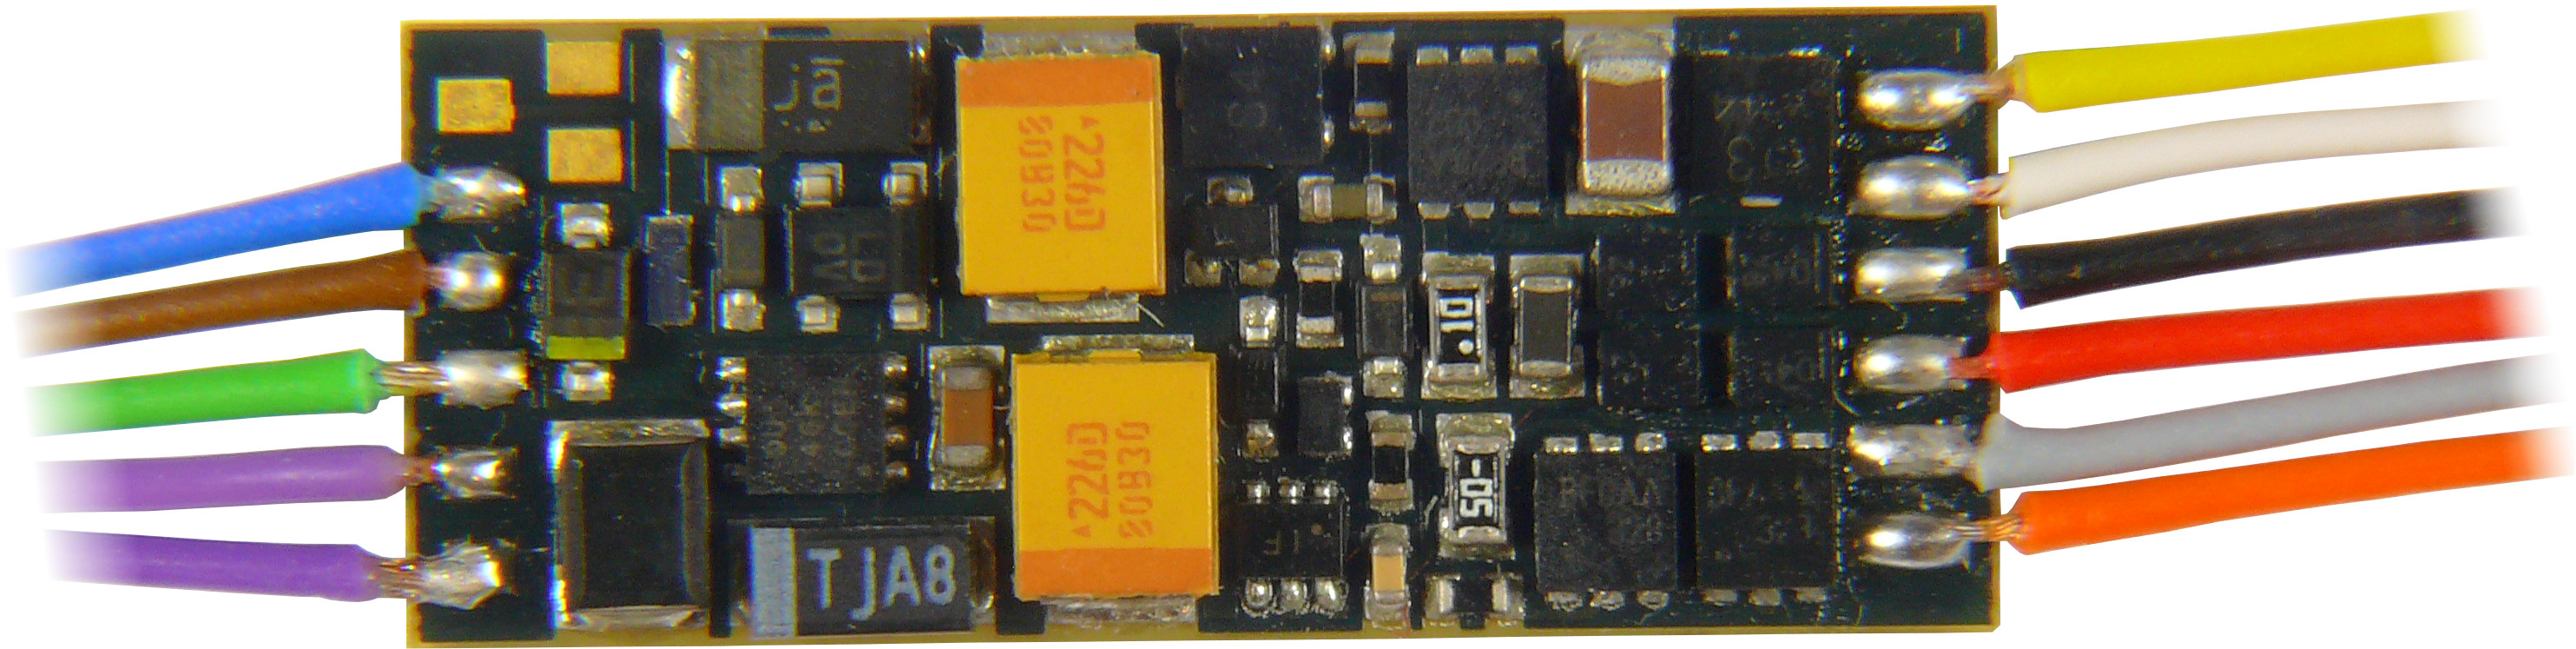 Zimo mx648 Lok-decodificador subminiatur-Sound-decodificadores loco decodificador 